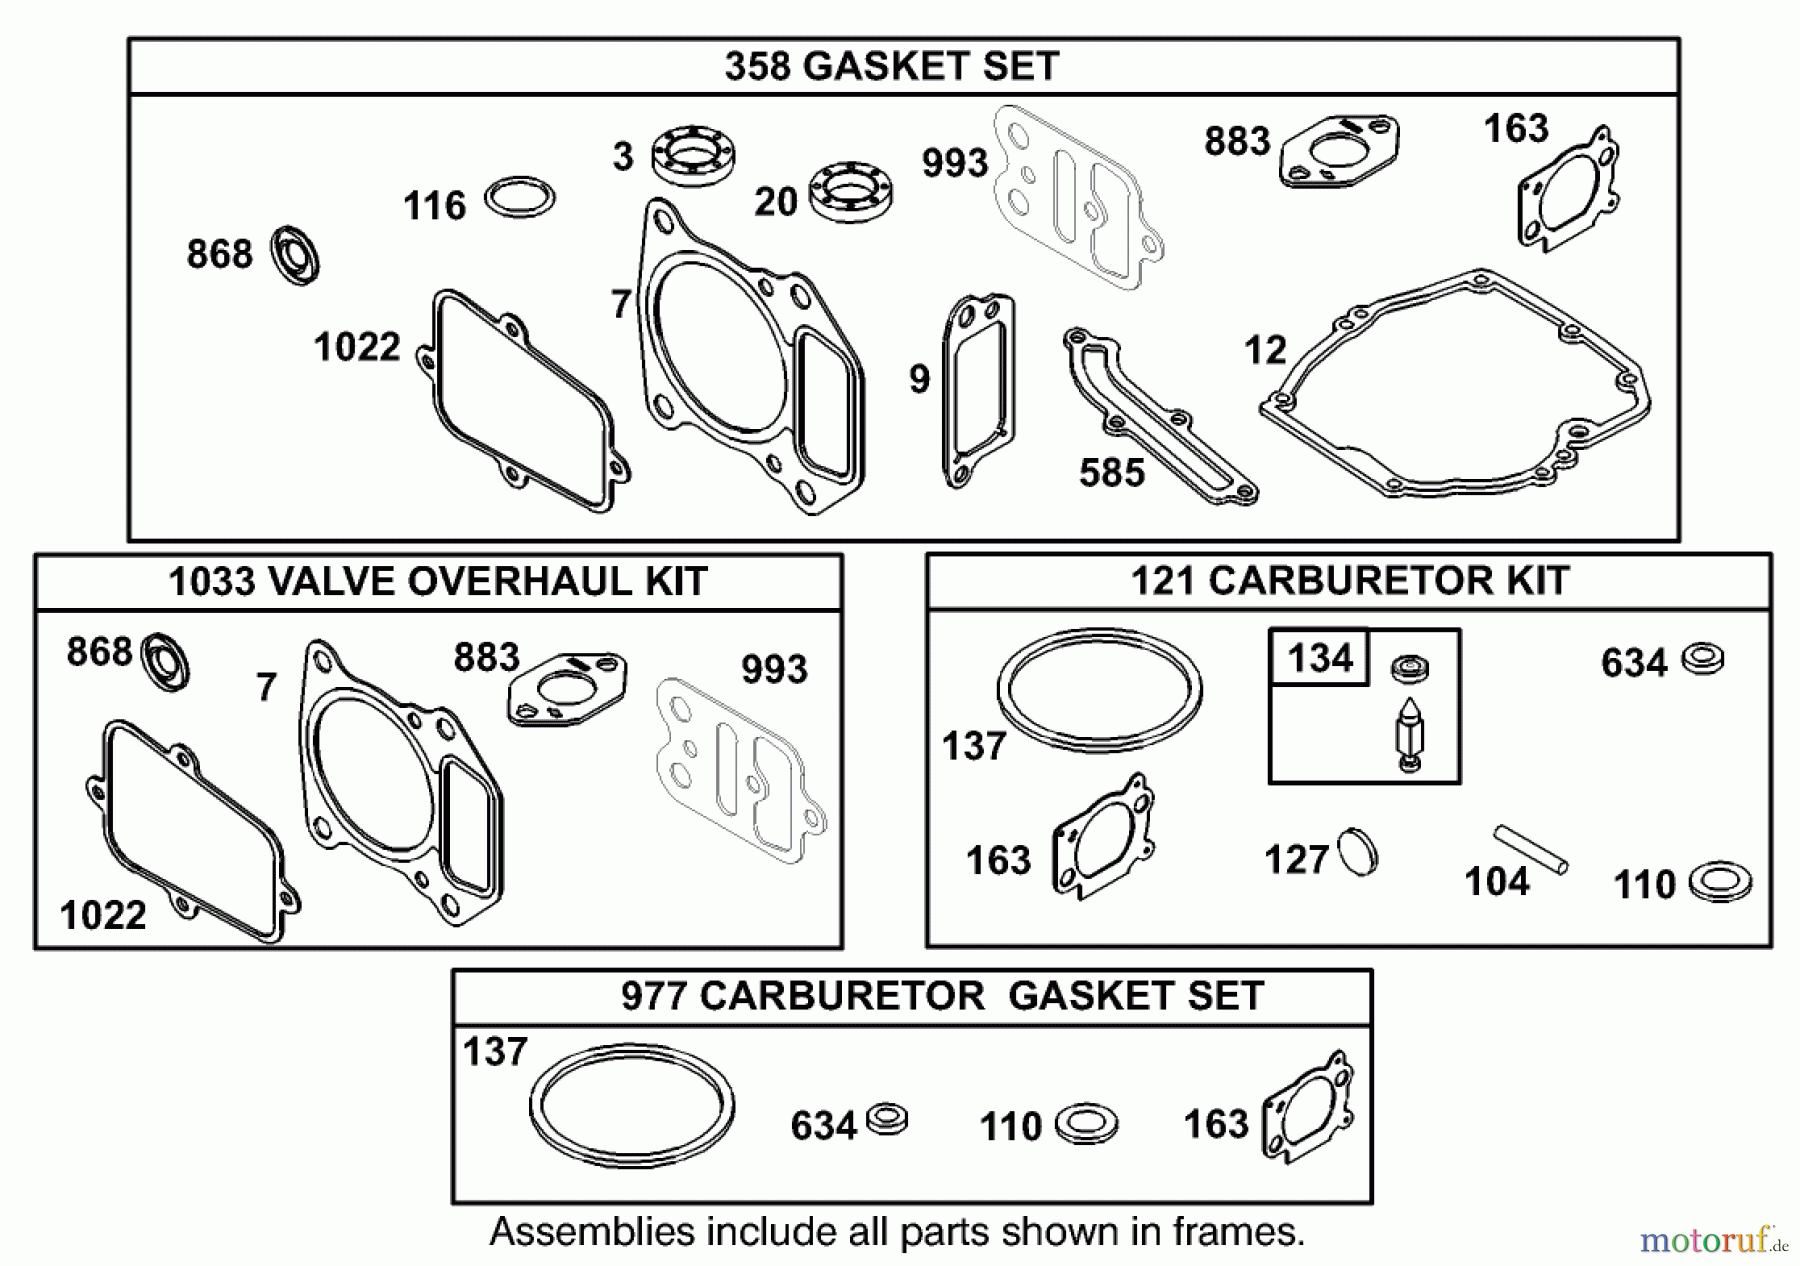  Toro Neu Accessories, Mower 105-1293 - Toro GTS 150 to 200 Conversion Kit, 1995-97 Super Recycler Lawnmowers CARBURETOR OVERHAUL KIT ASSEMBLY ENGINE GTS-200